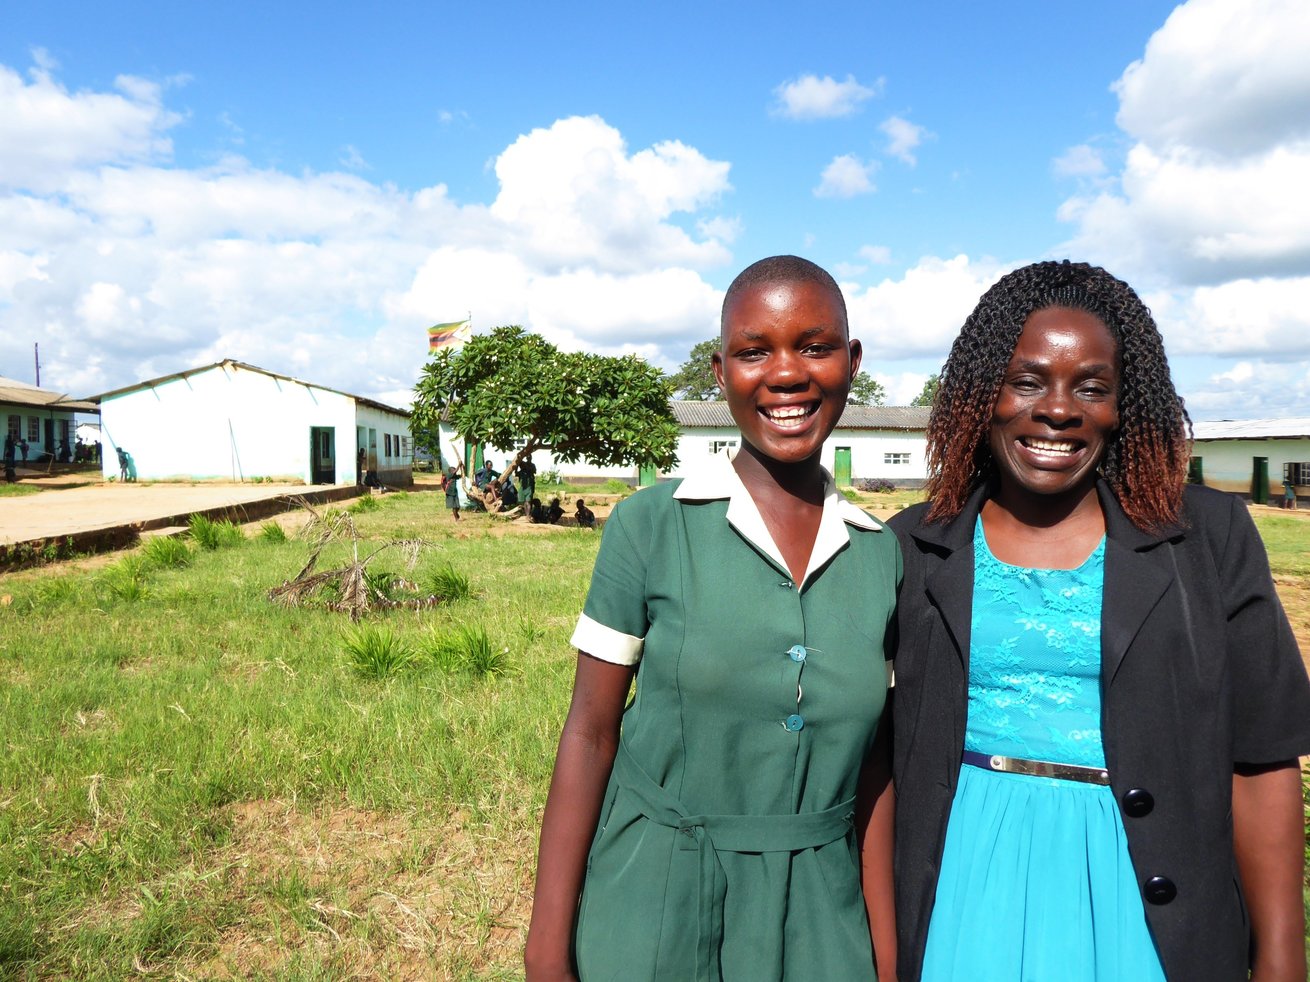 Join the club: School children promote health in rural Zimbabwe